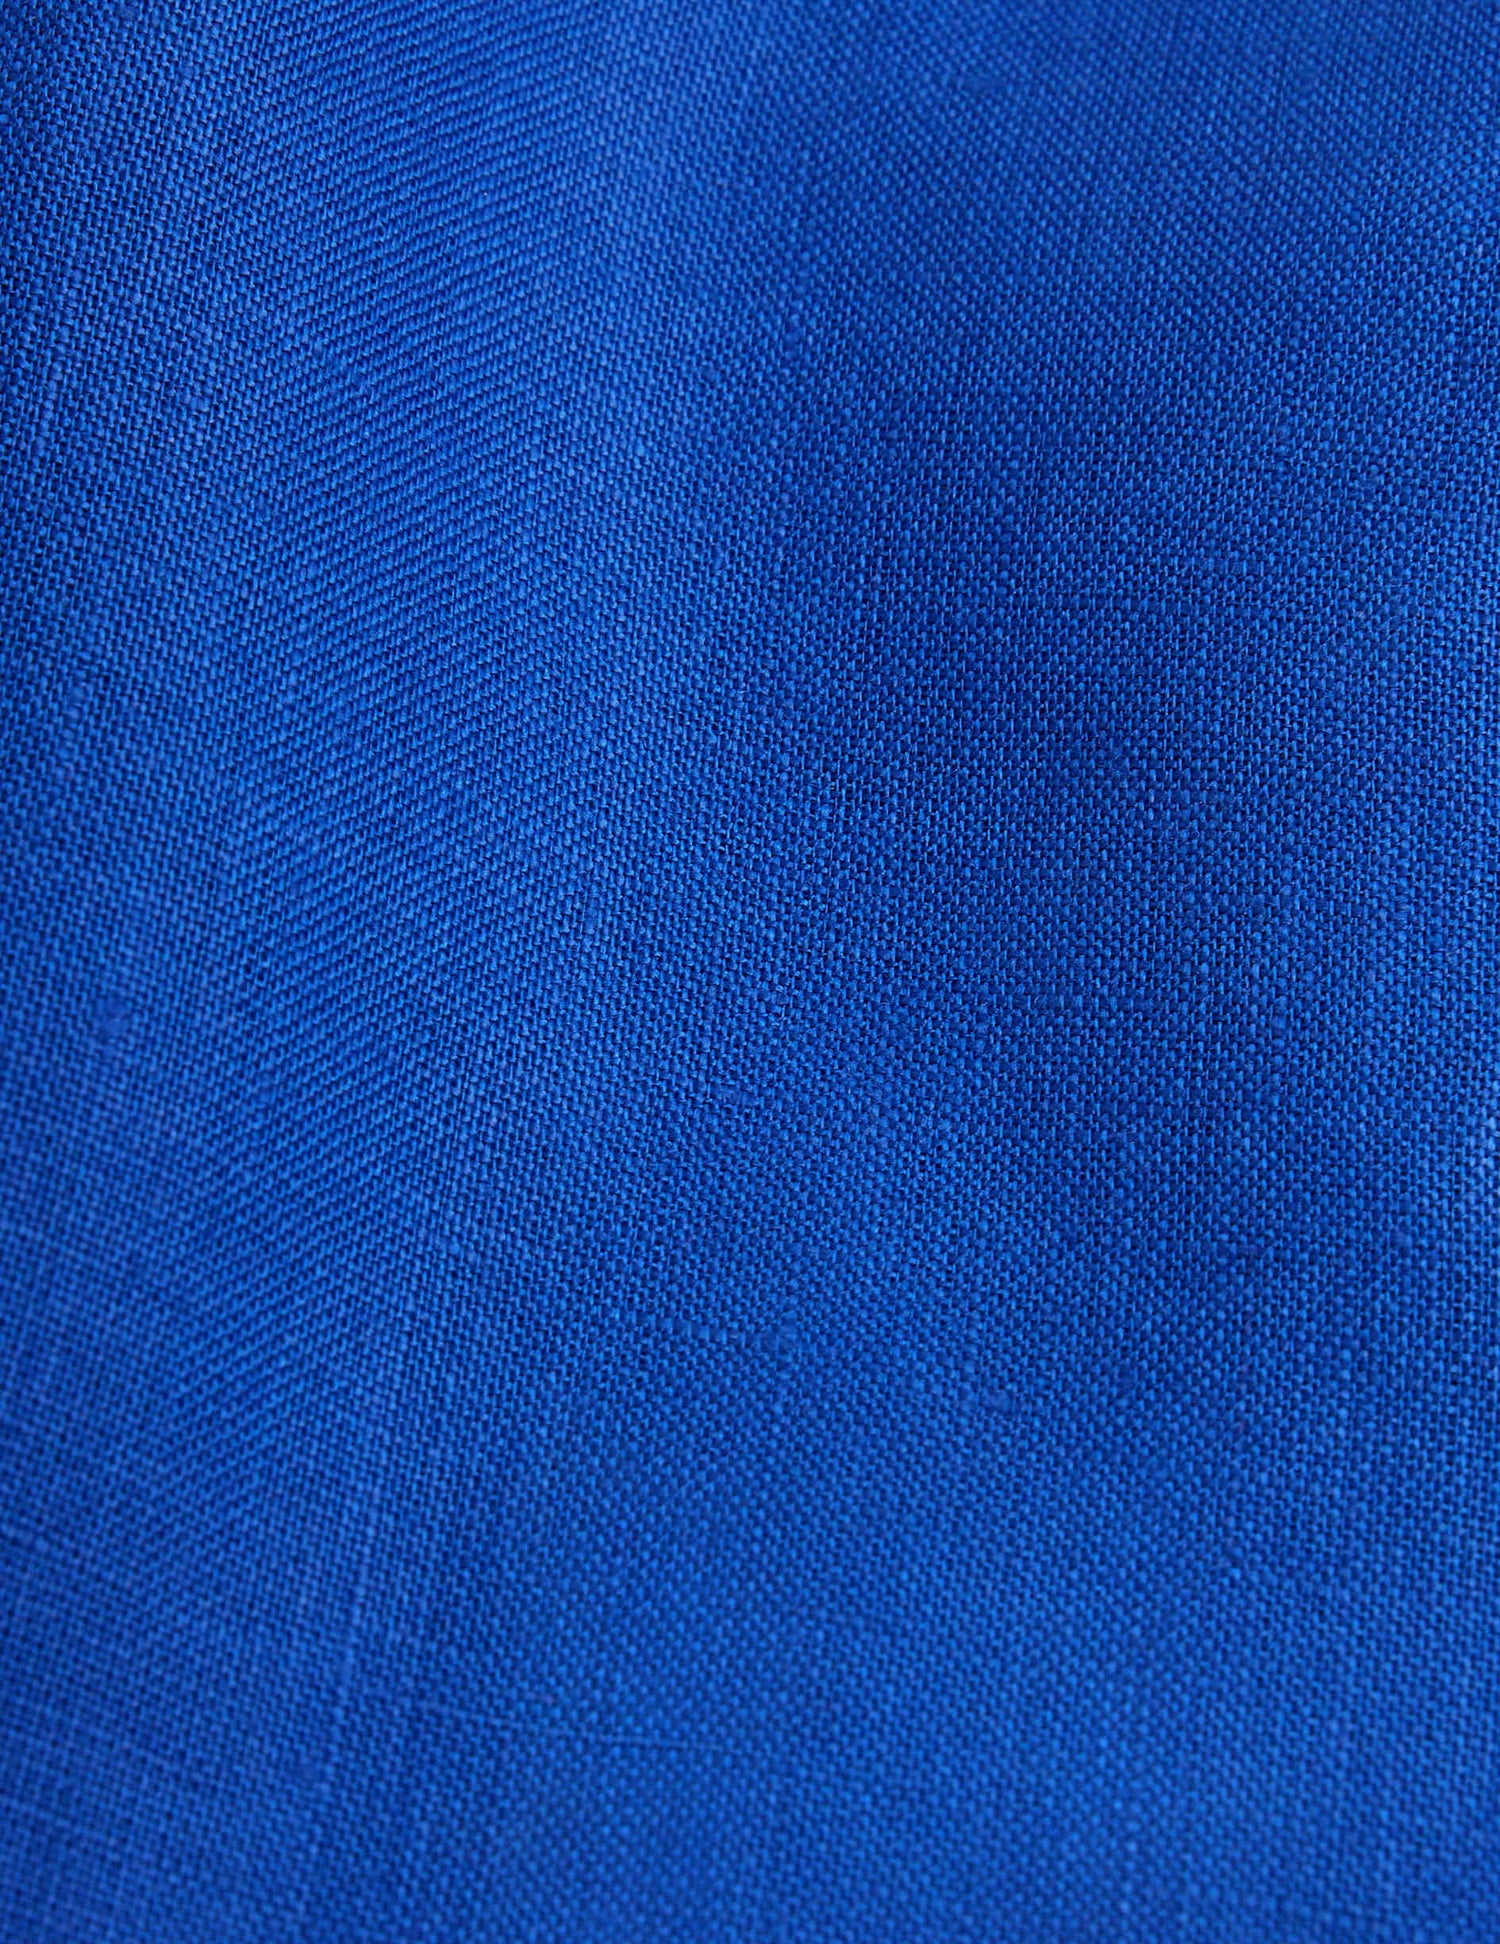 Auguste shirt in blue linen - Linen - French Collar#5